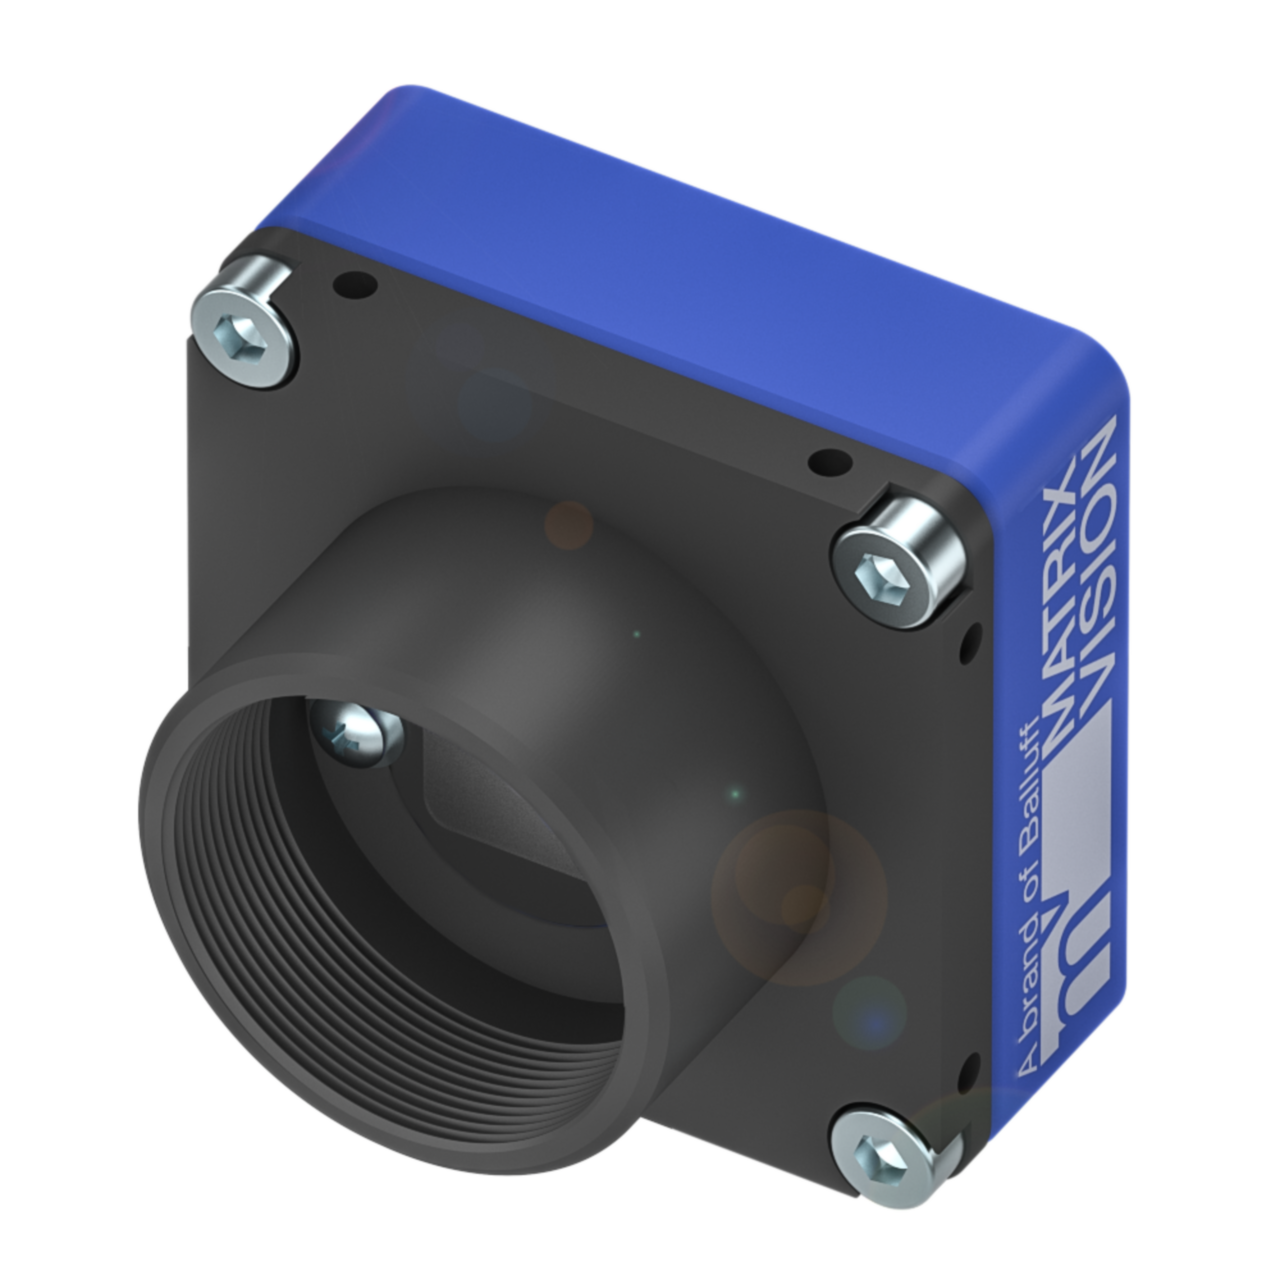 Matrix Vision USB 2.0 board-level camera BlueFox-M102aG W/ LENS & LED LIGHT